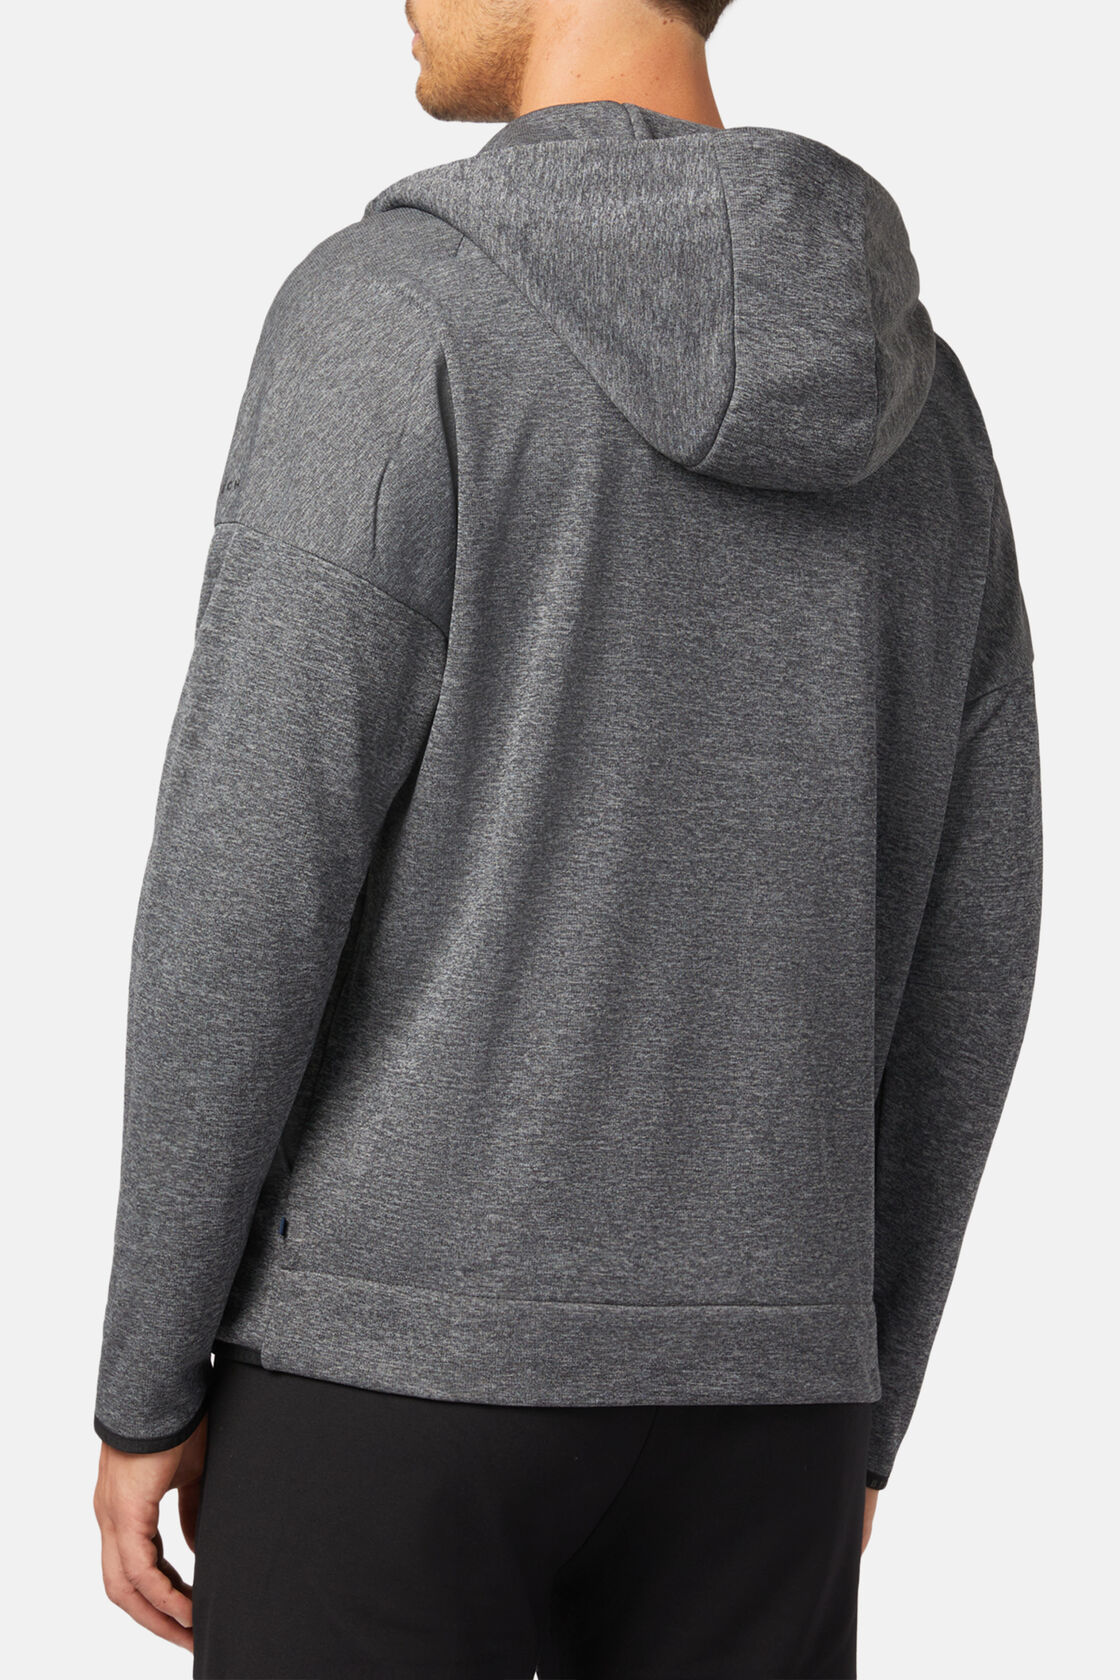 Full Zip Hooded Sweatshirt in Technical Fabric, Charcoal, hi-res